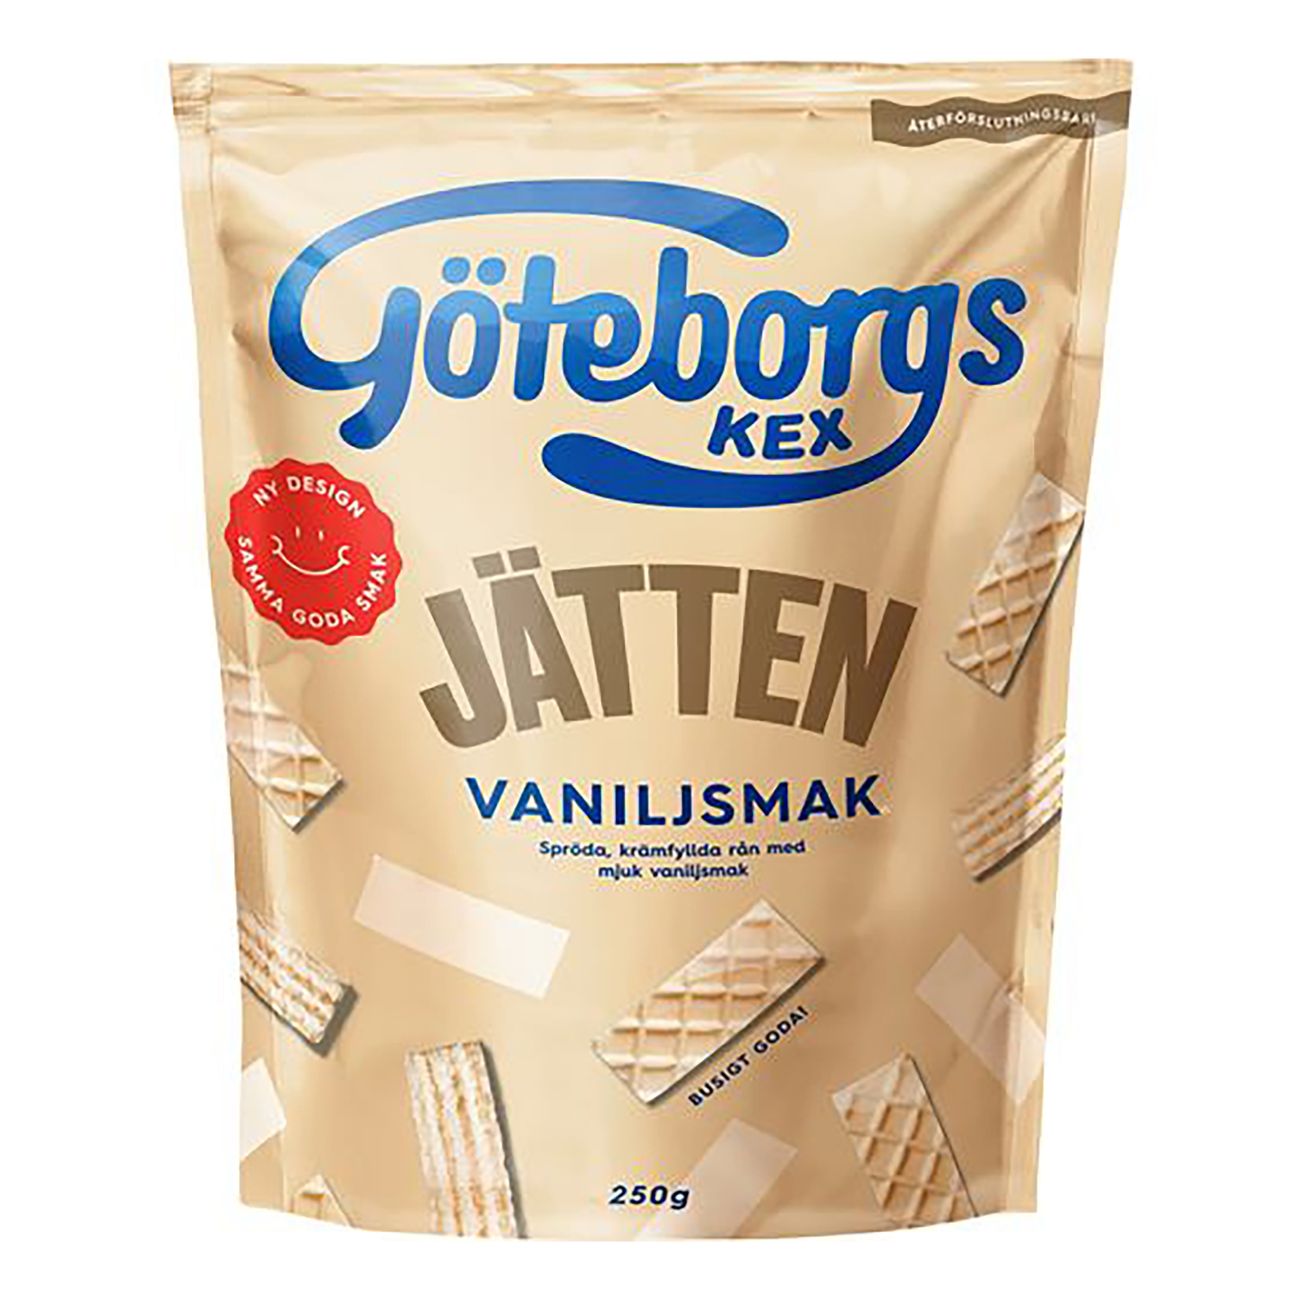 jatten-vanilj-kex-86407-1